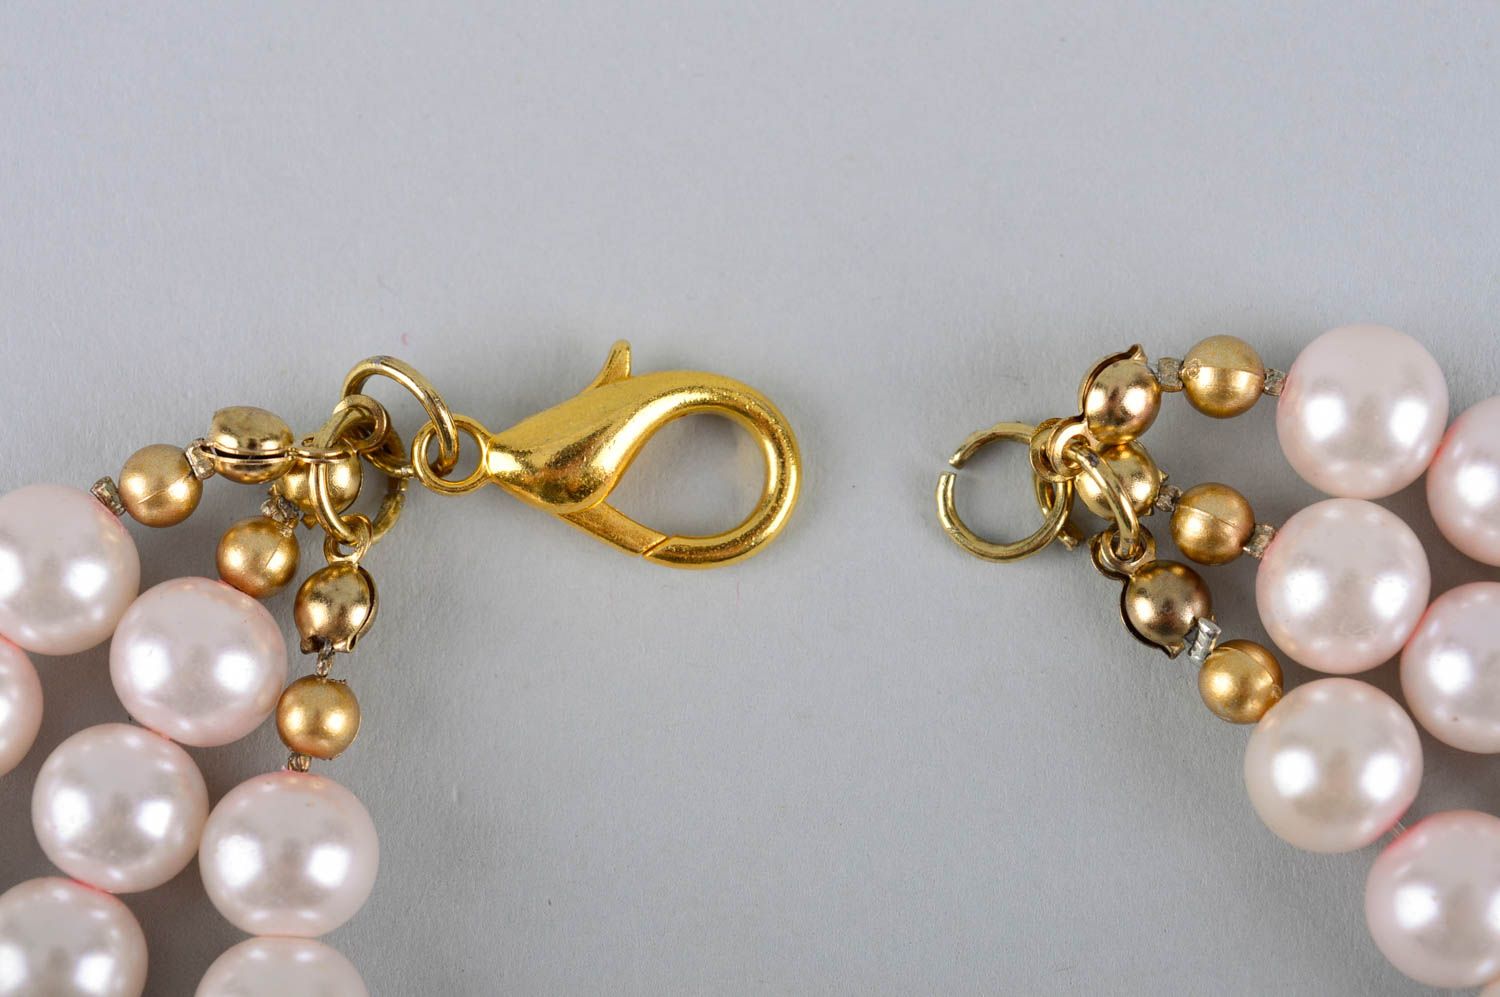 Handmade artificial pearls necklace unique designer jewelry accessory present photo 5